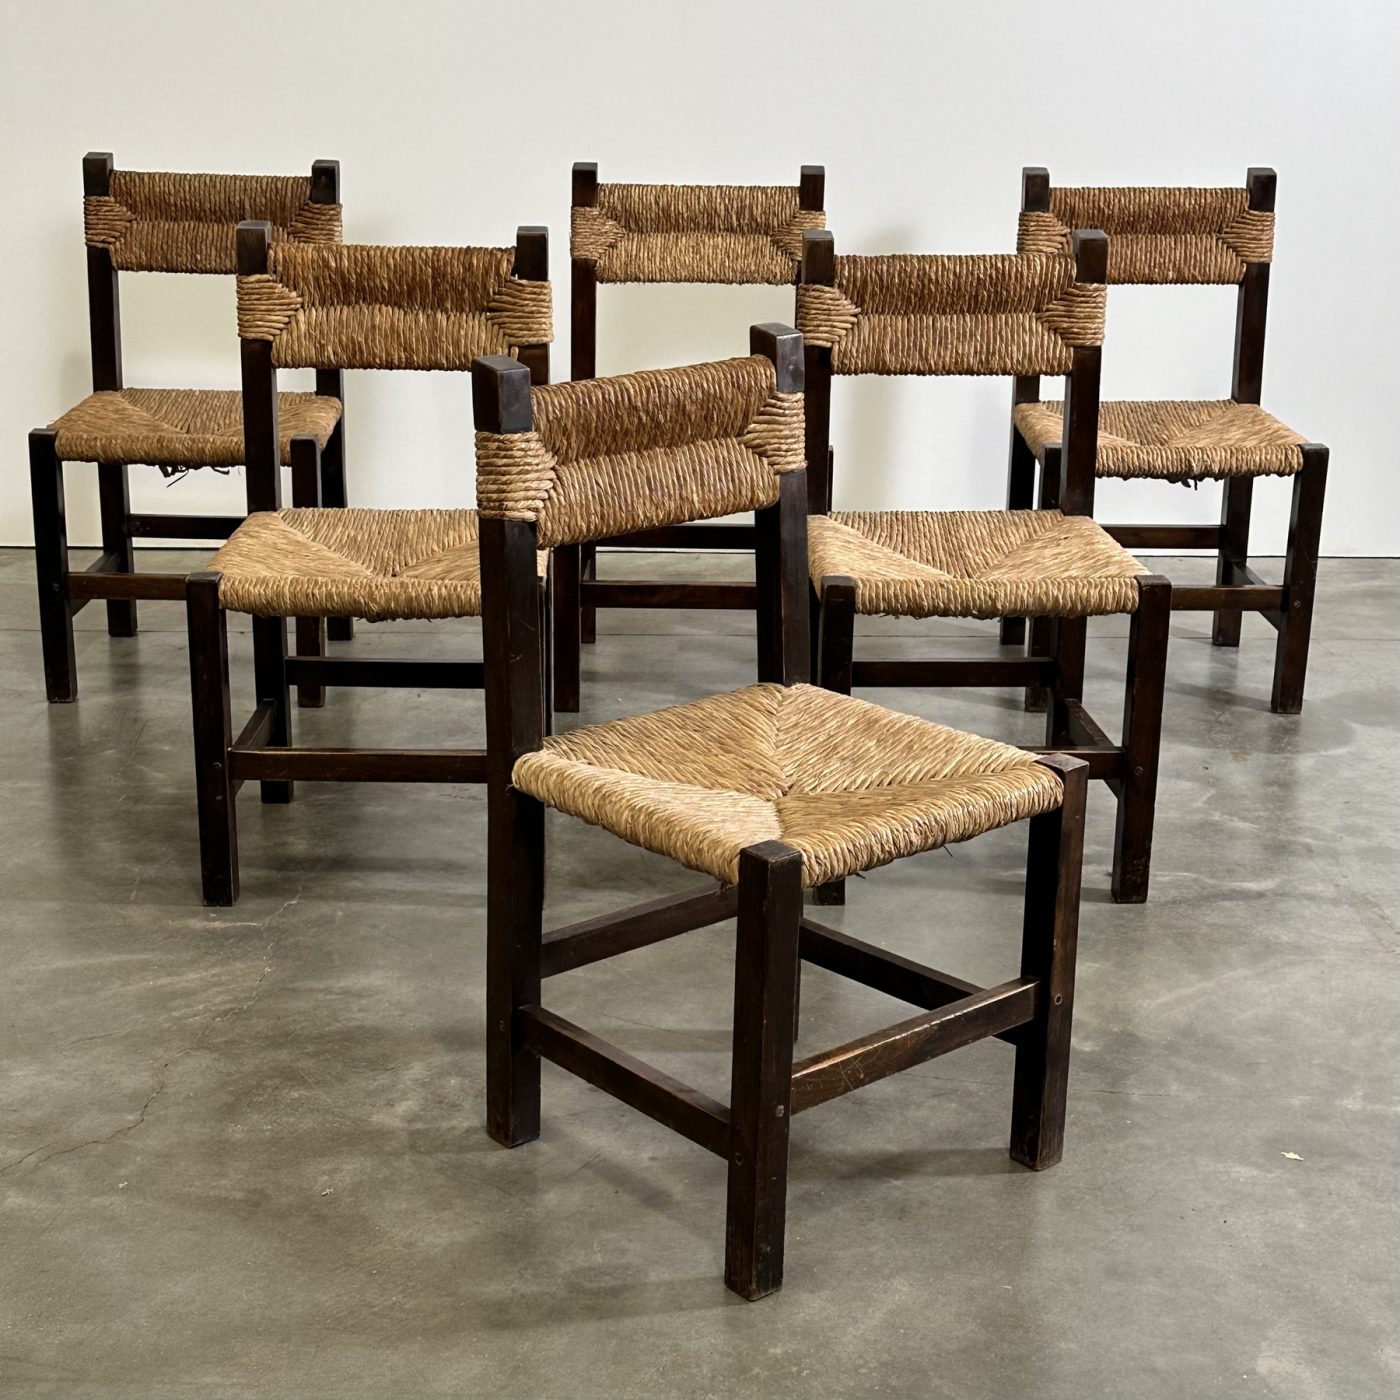 objet-vagabond-straw-chairs0003